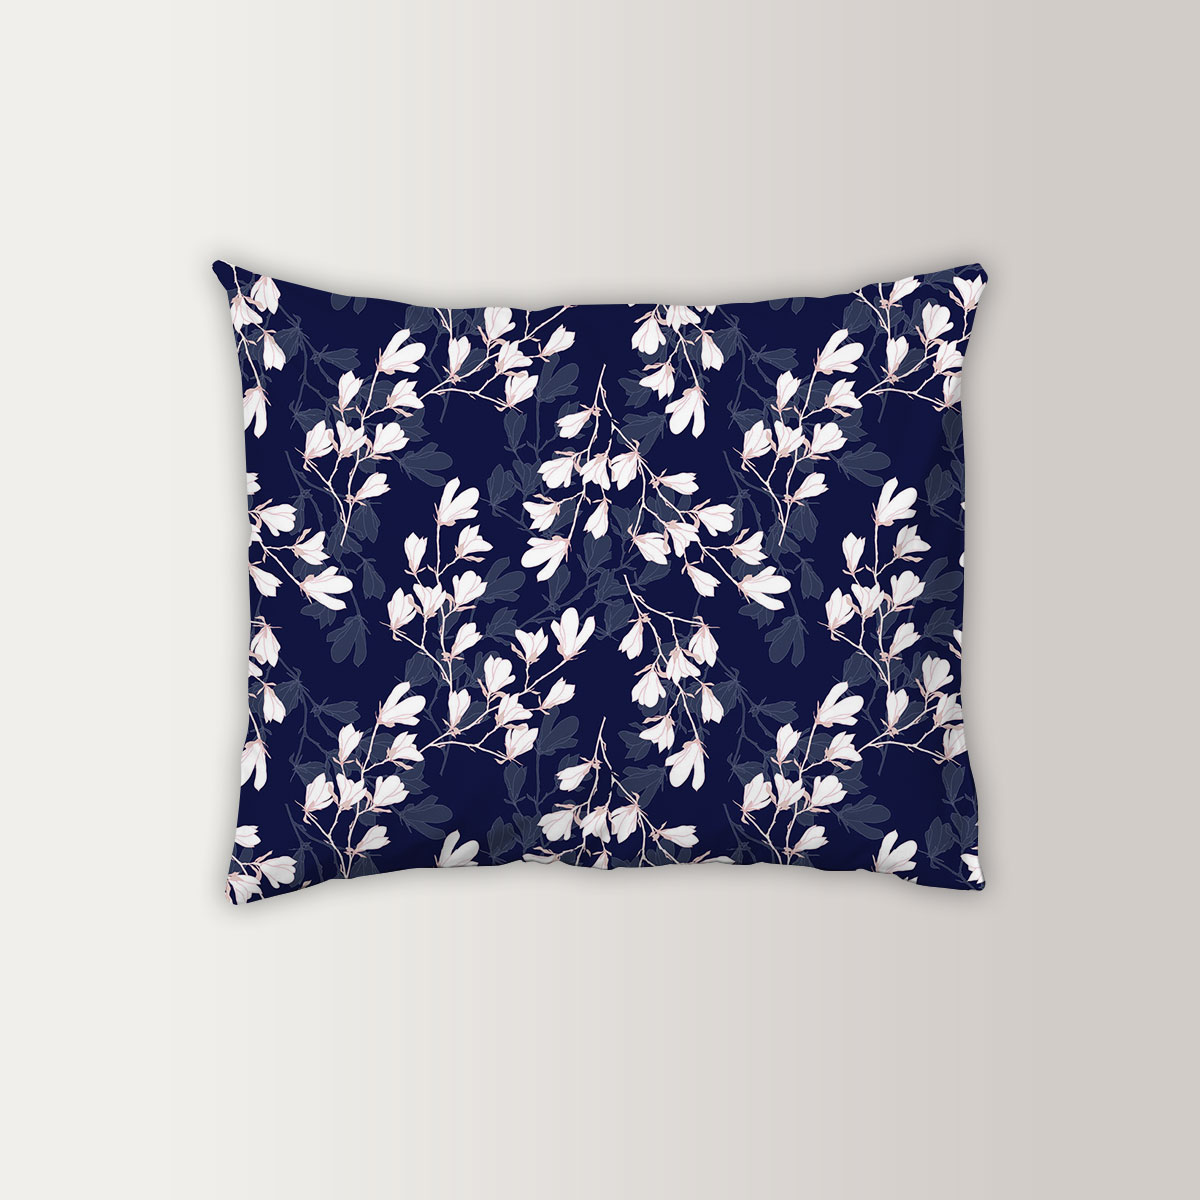 White Magnolia Flower On Dark Blue Background Pillow Case